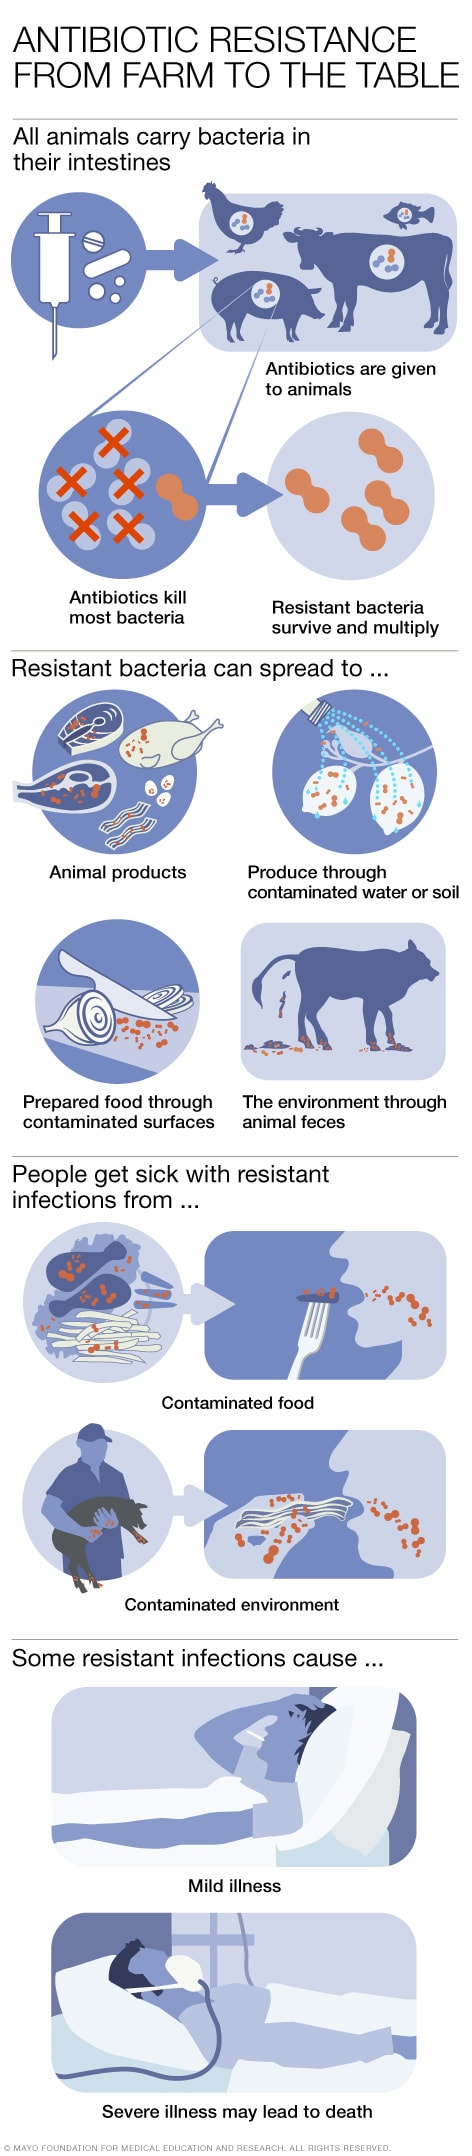 Antibiotic use in food-producing animals